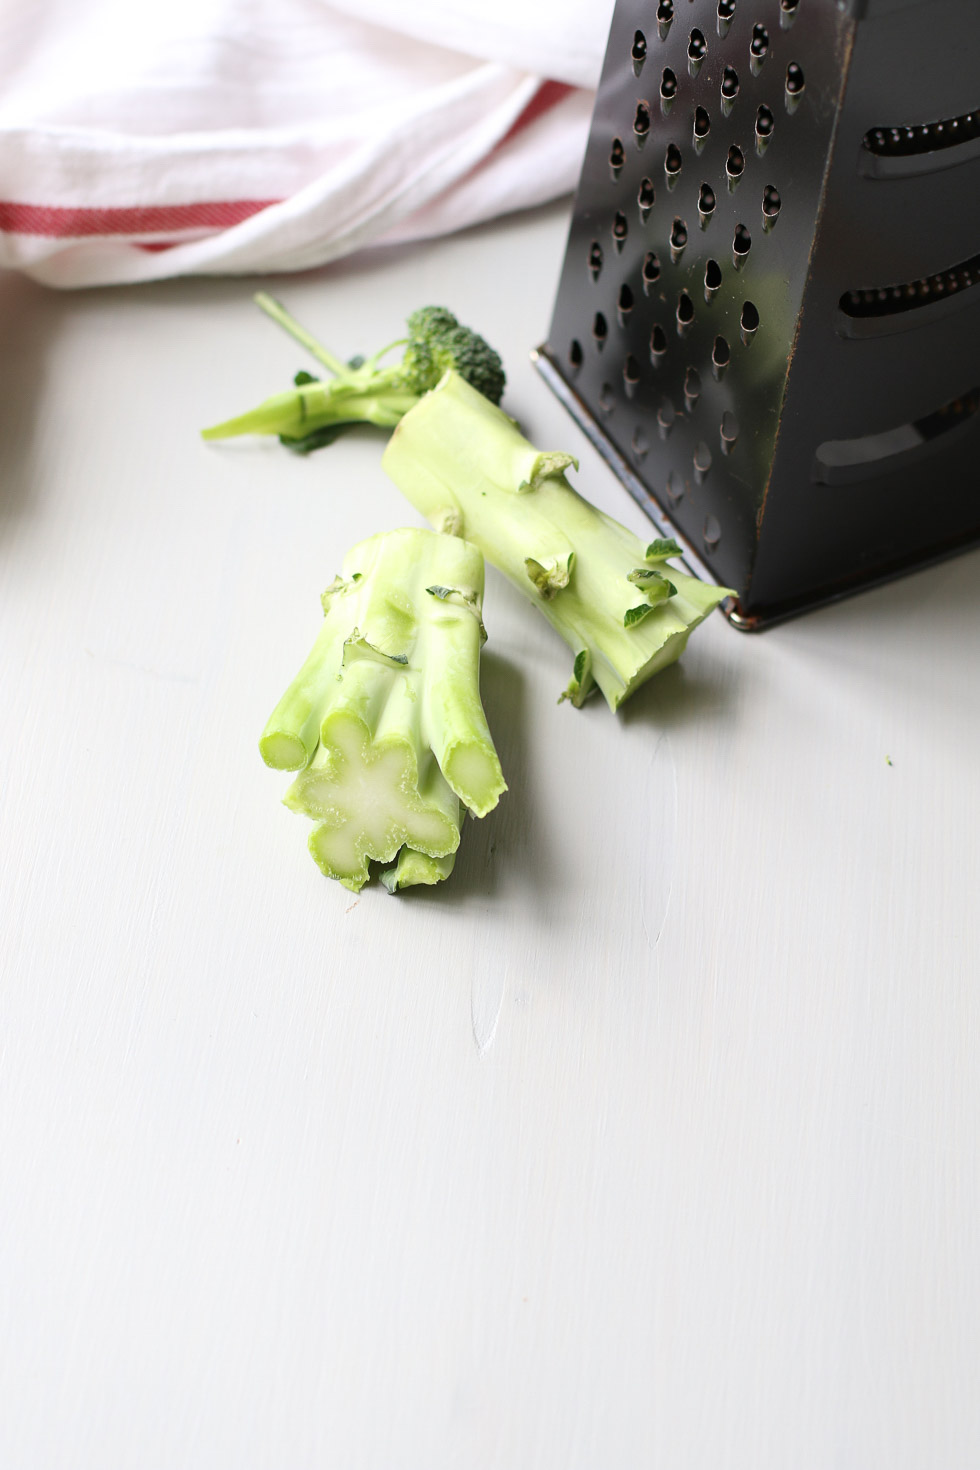 How to Use Broccoli Stalks